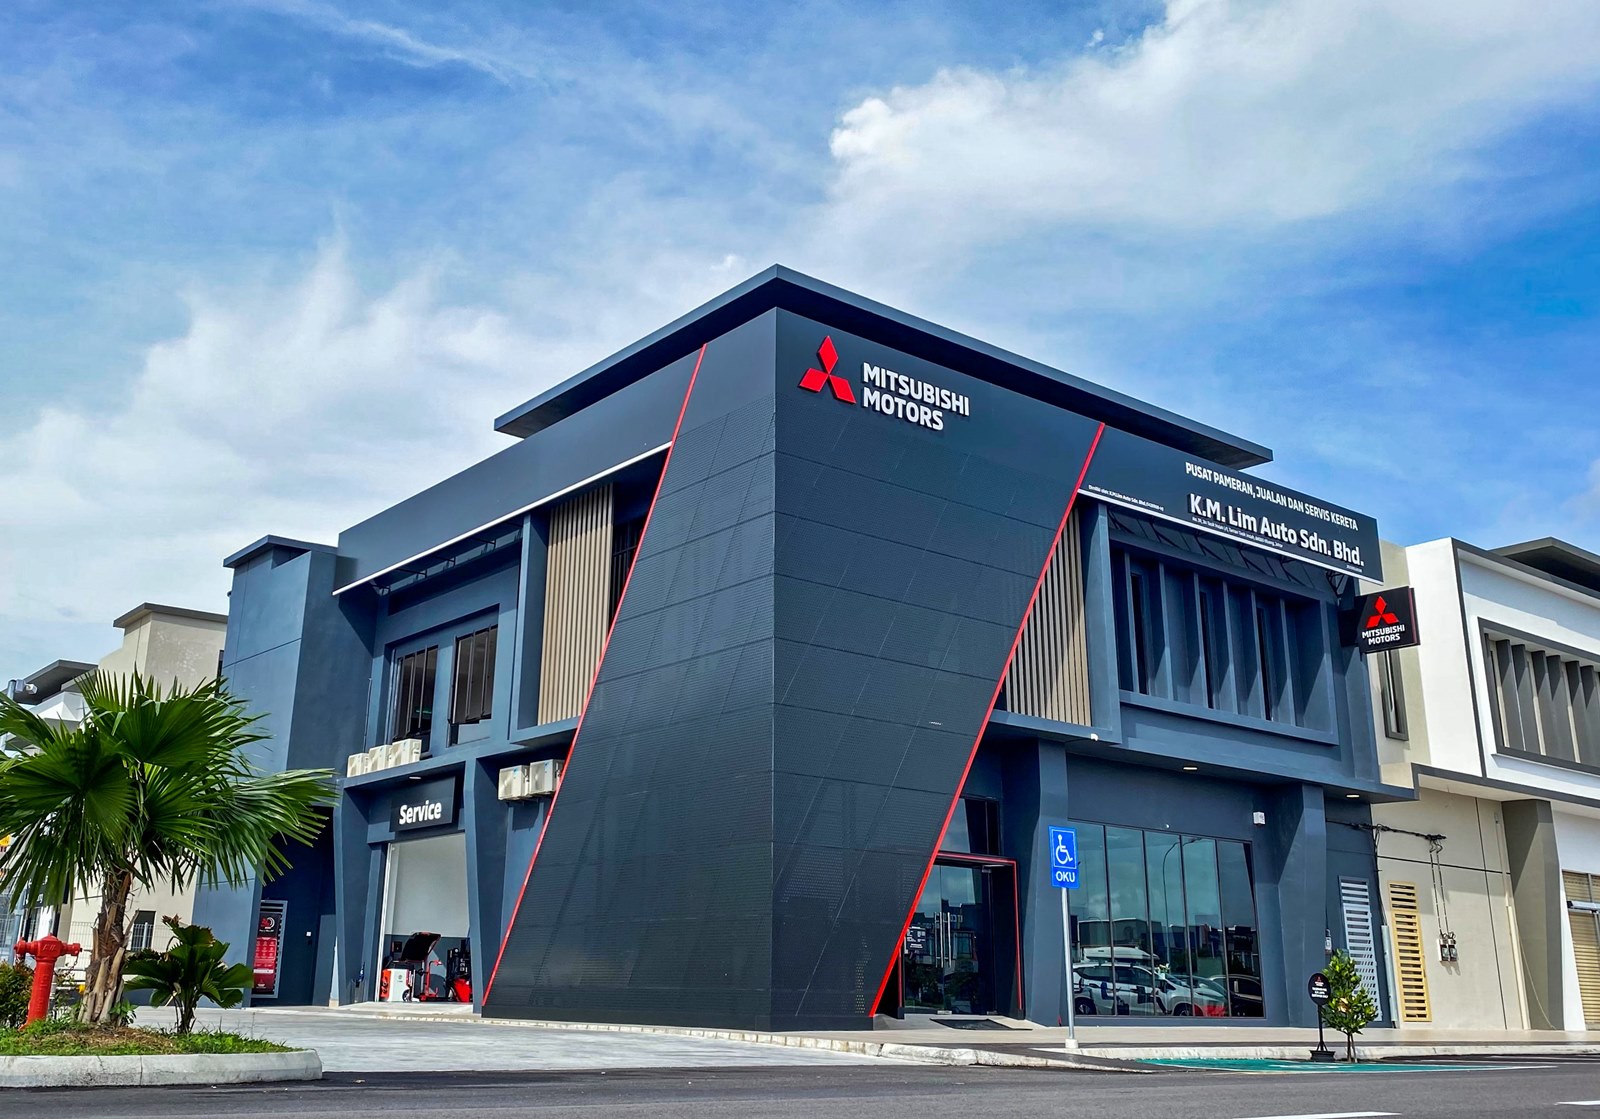 Mitsubishi Motors 3S centre in Kluang, Johor